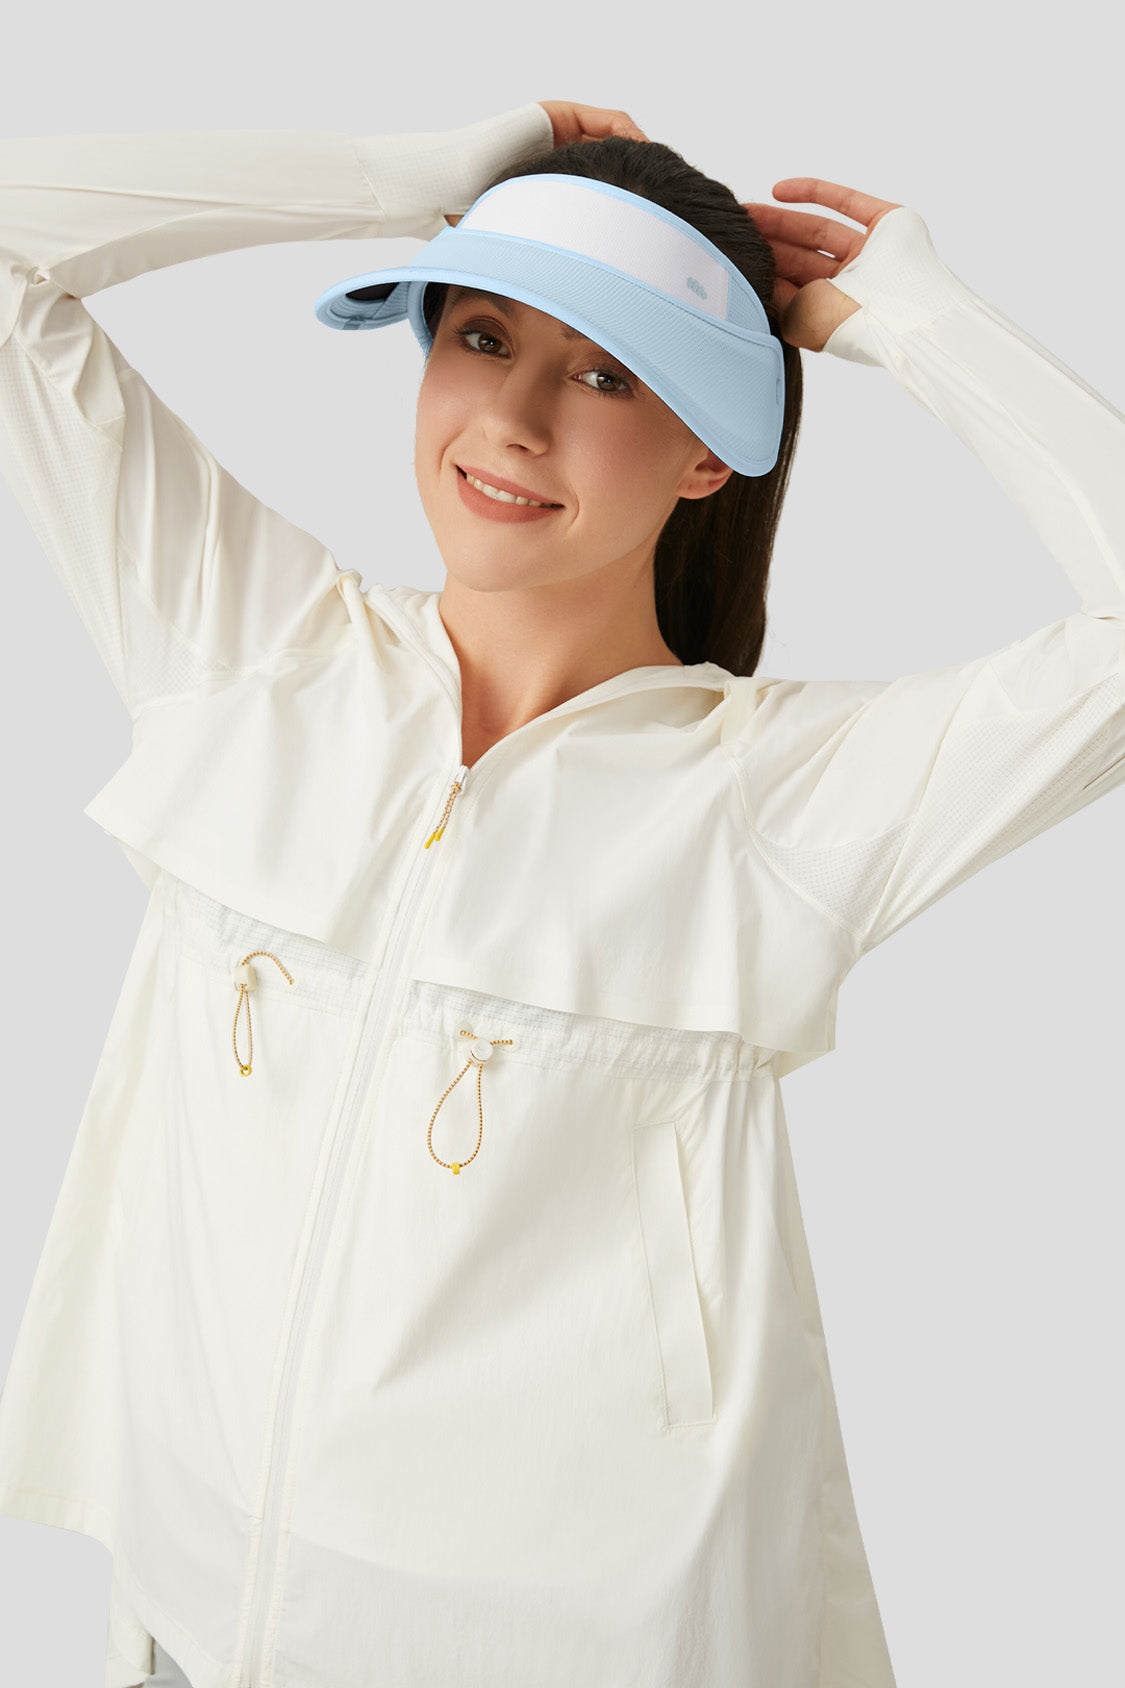 Sun Hat for Women, Beneunder UPF50+ Packable Wide Brim UV